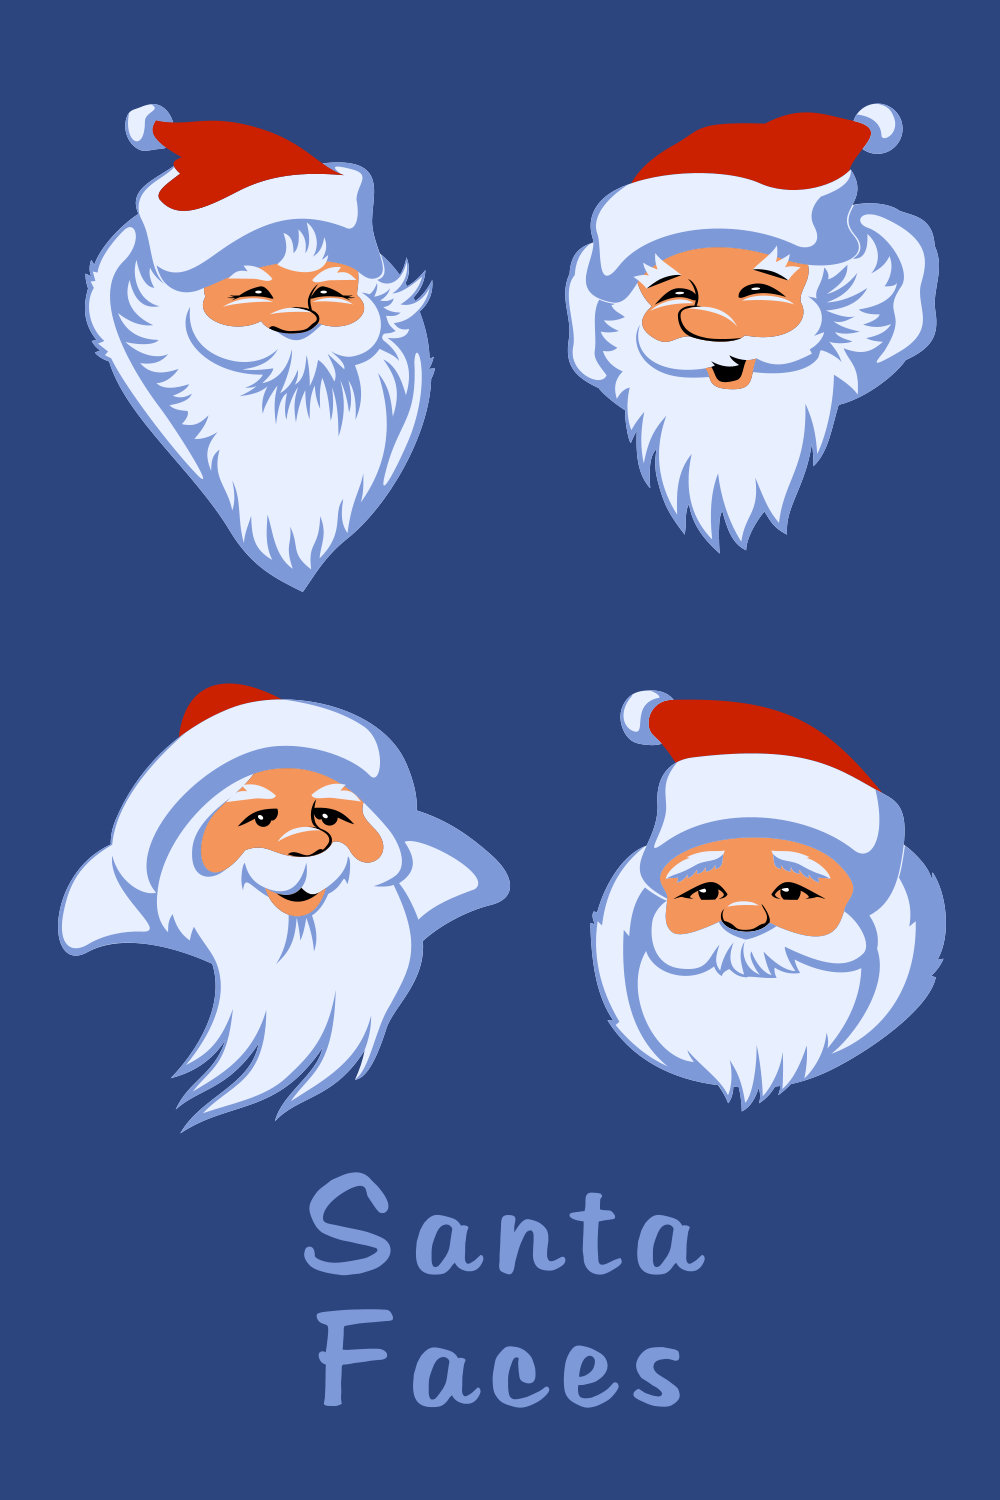 Santa Claus Faces Illustrations Design pinterest image.